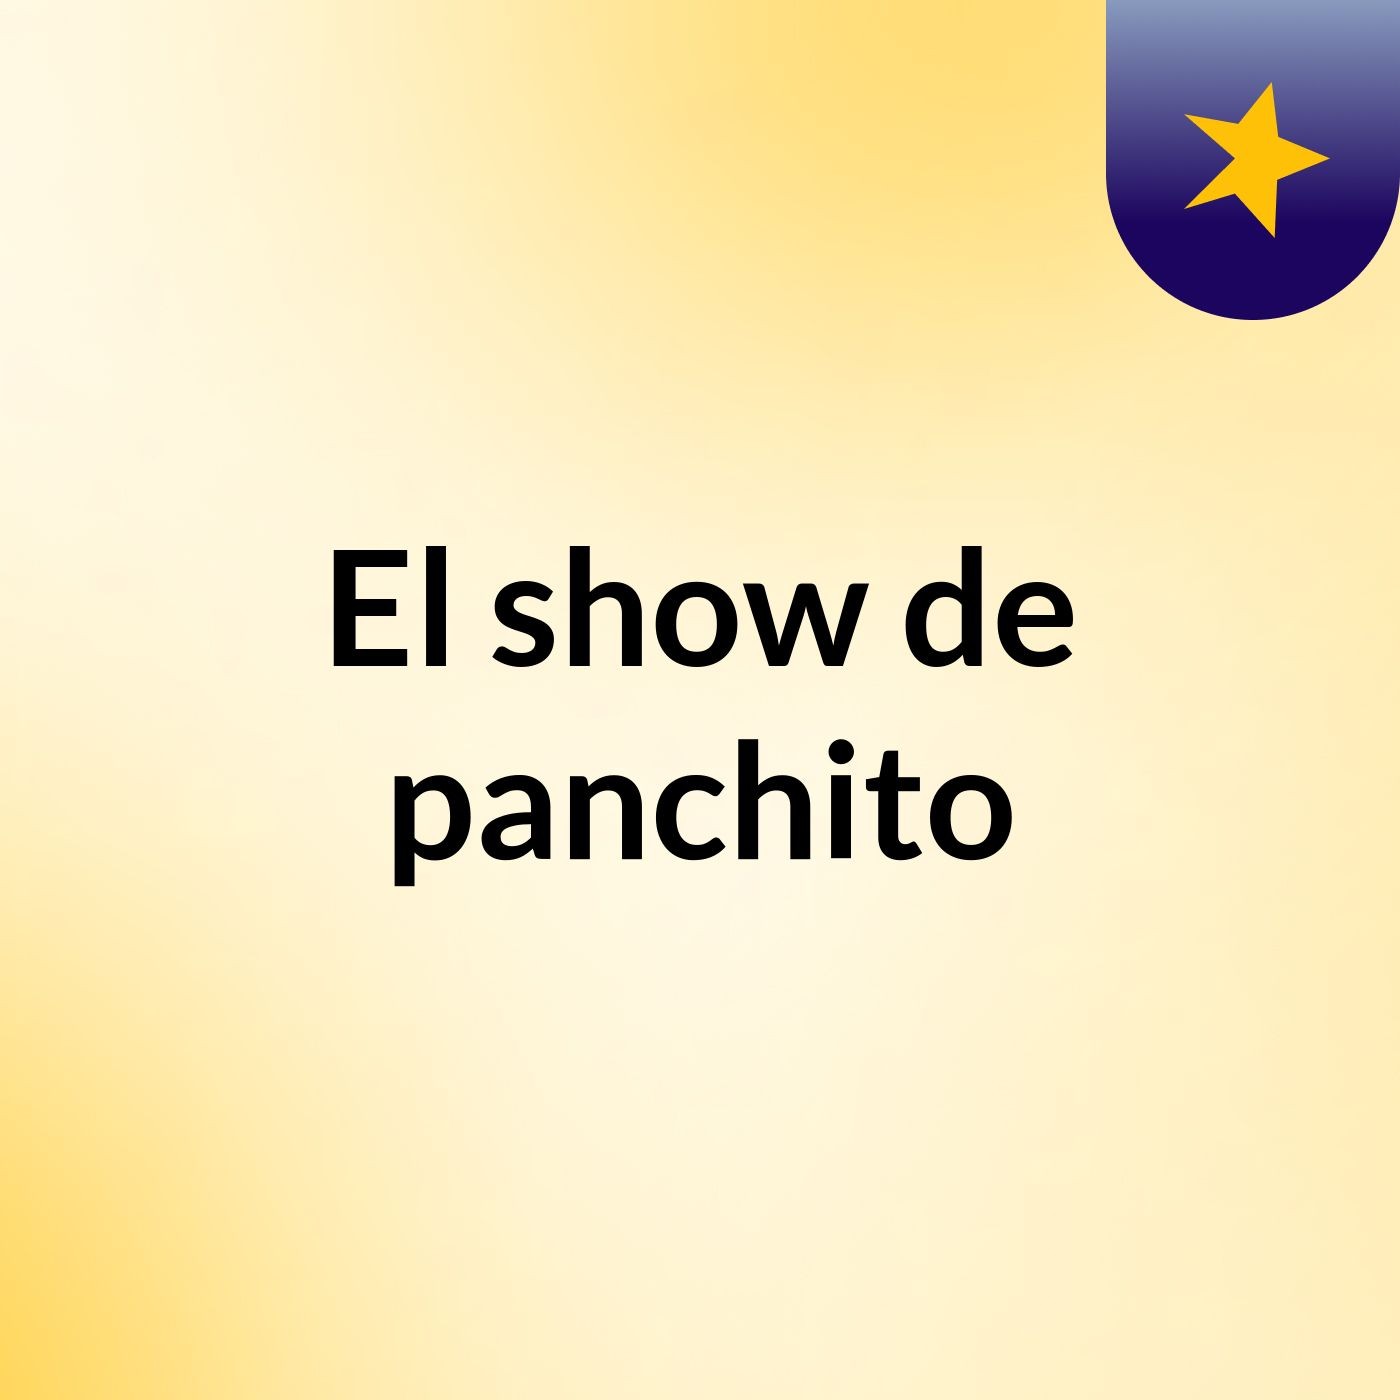 El show de panchito